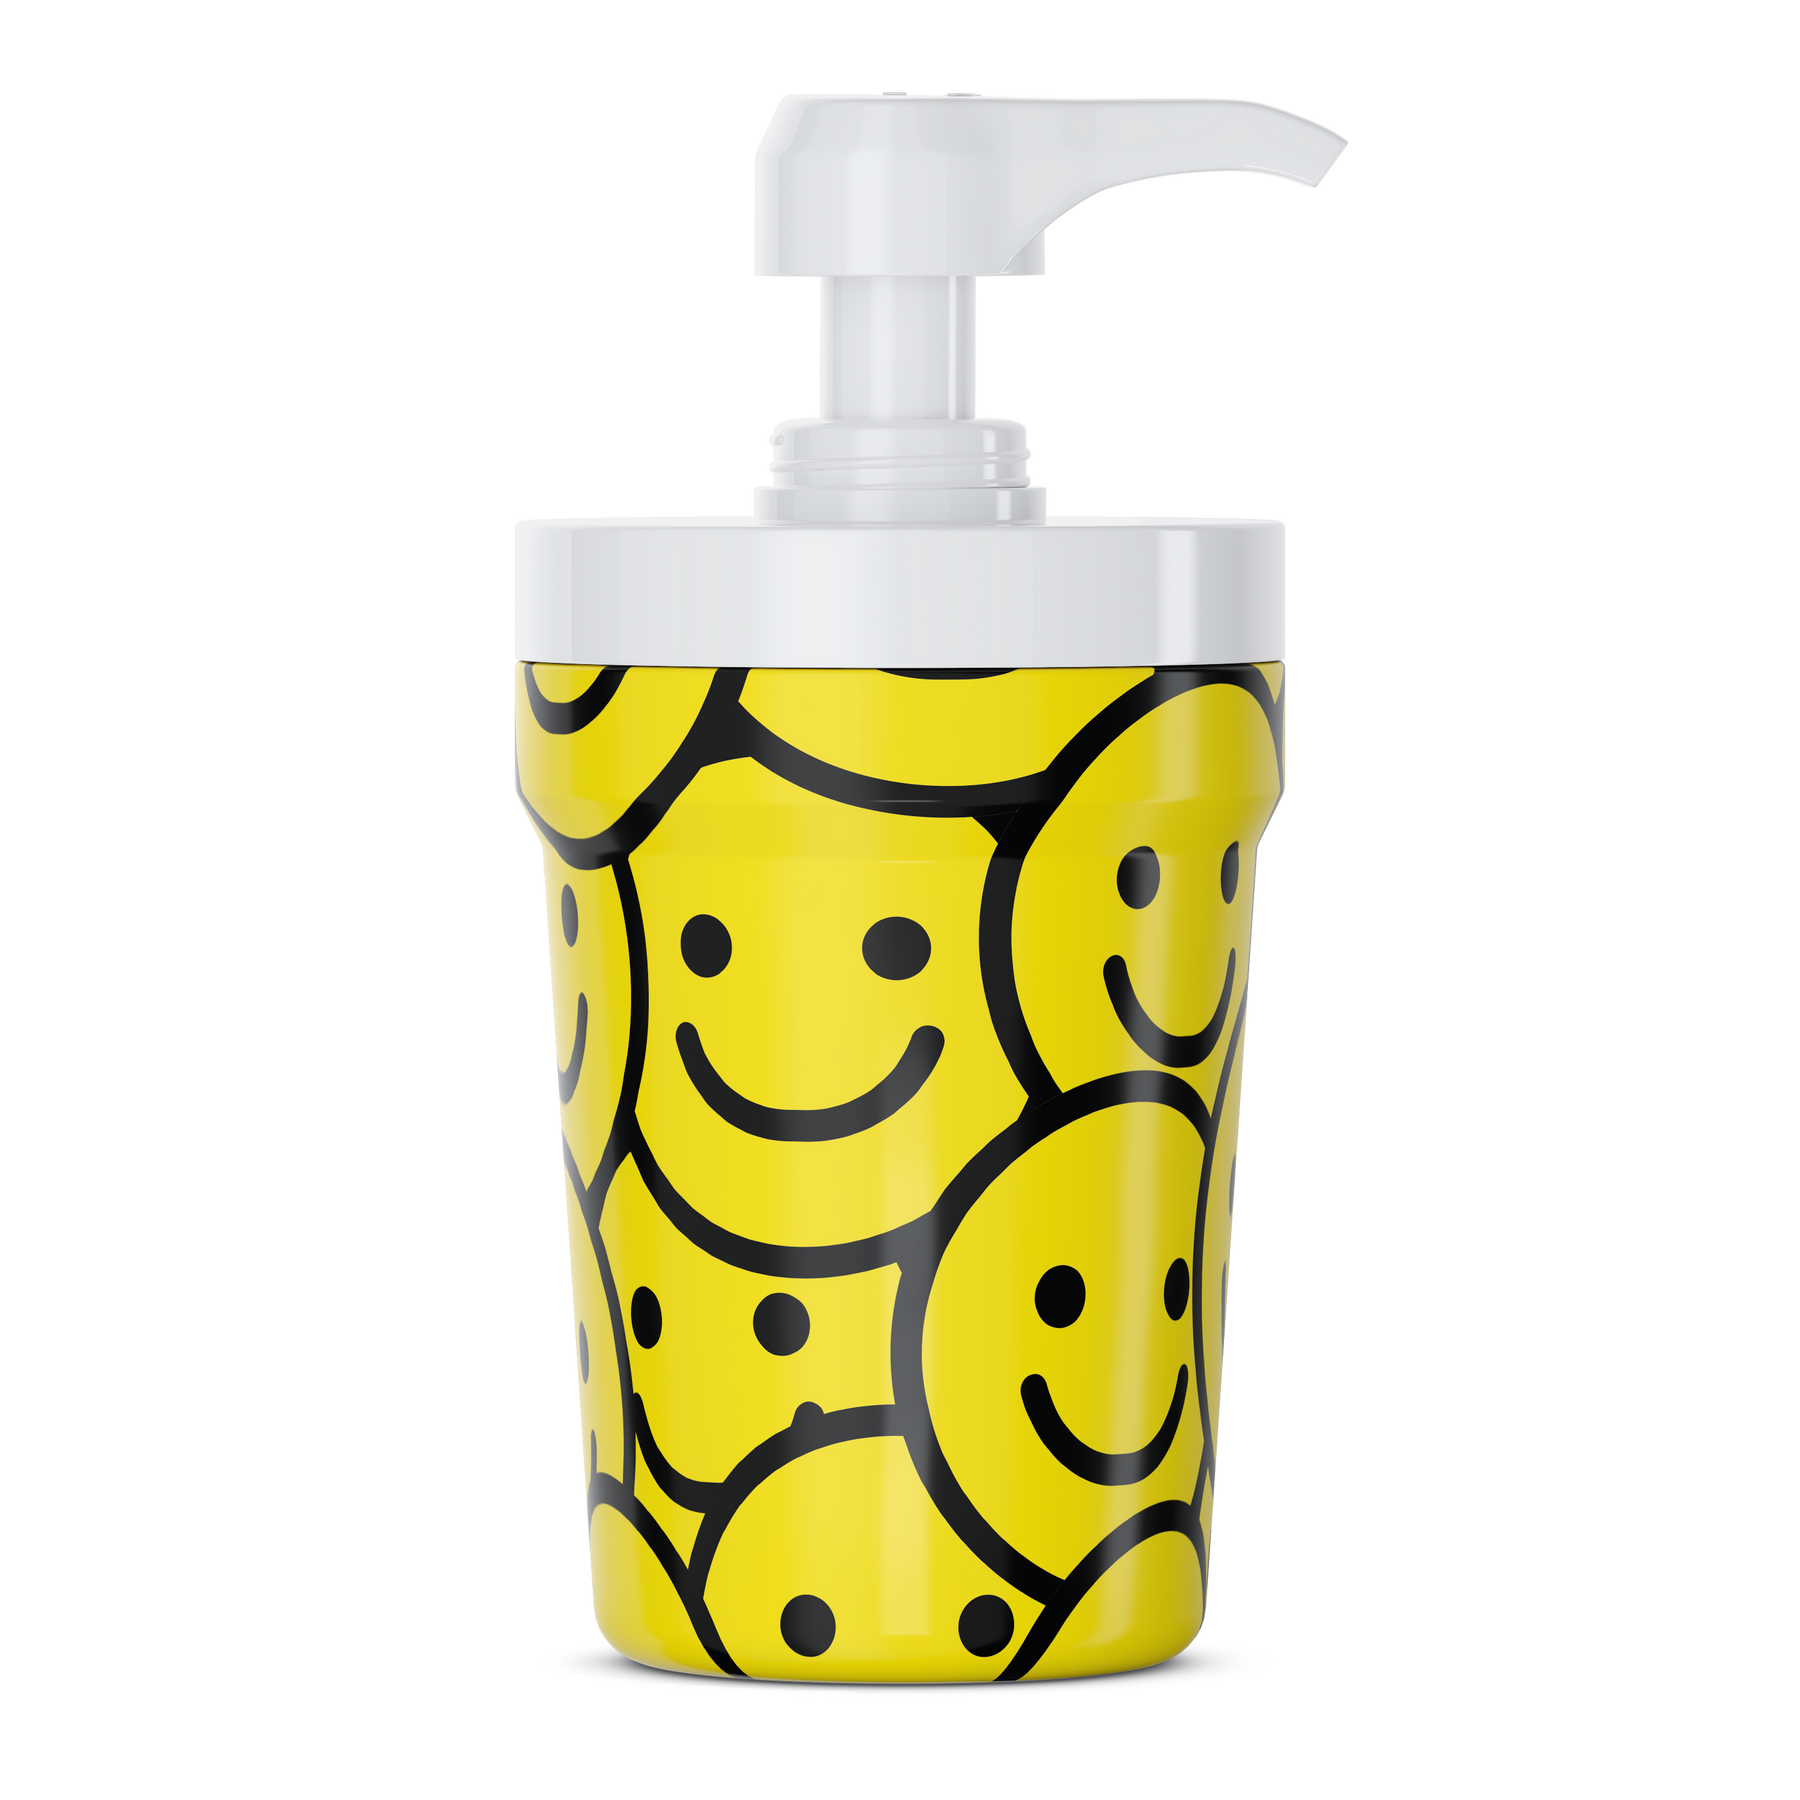 3dRose Sunshine Smiley Face Sports Water Bottle, 21 oz, White